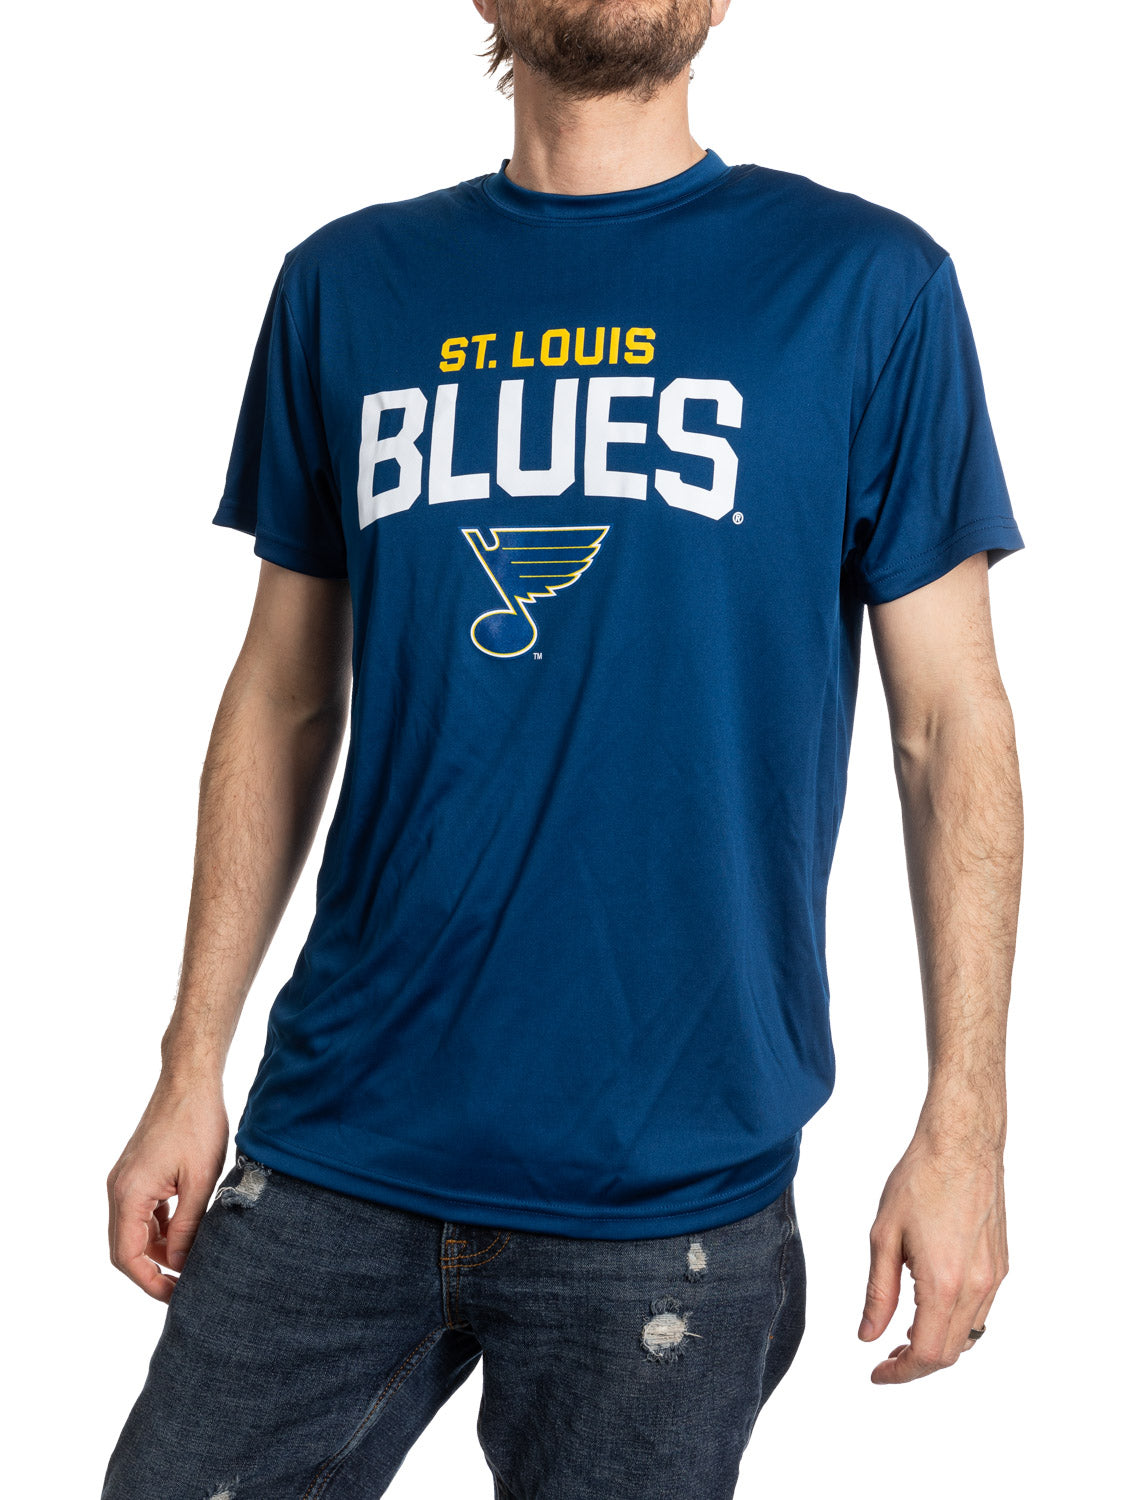 St. Louis Blues Short Sleeve Rashguard T Shirt - Alternate Logo